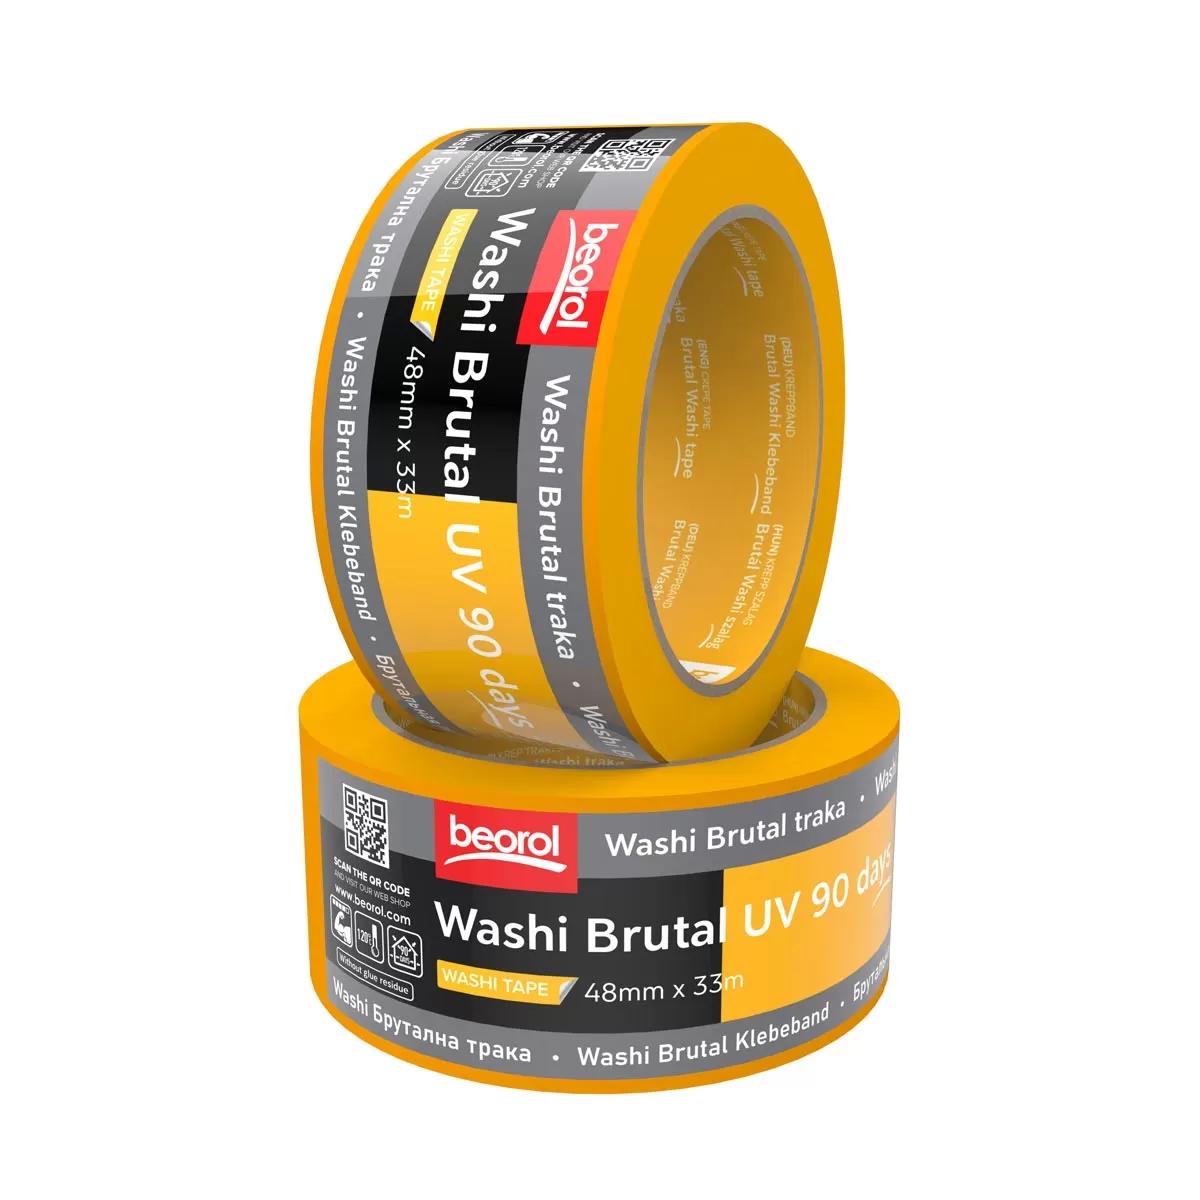 Brutal tape 90 days UV ( Washi Paper) 48mm x 33m 